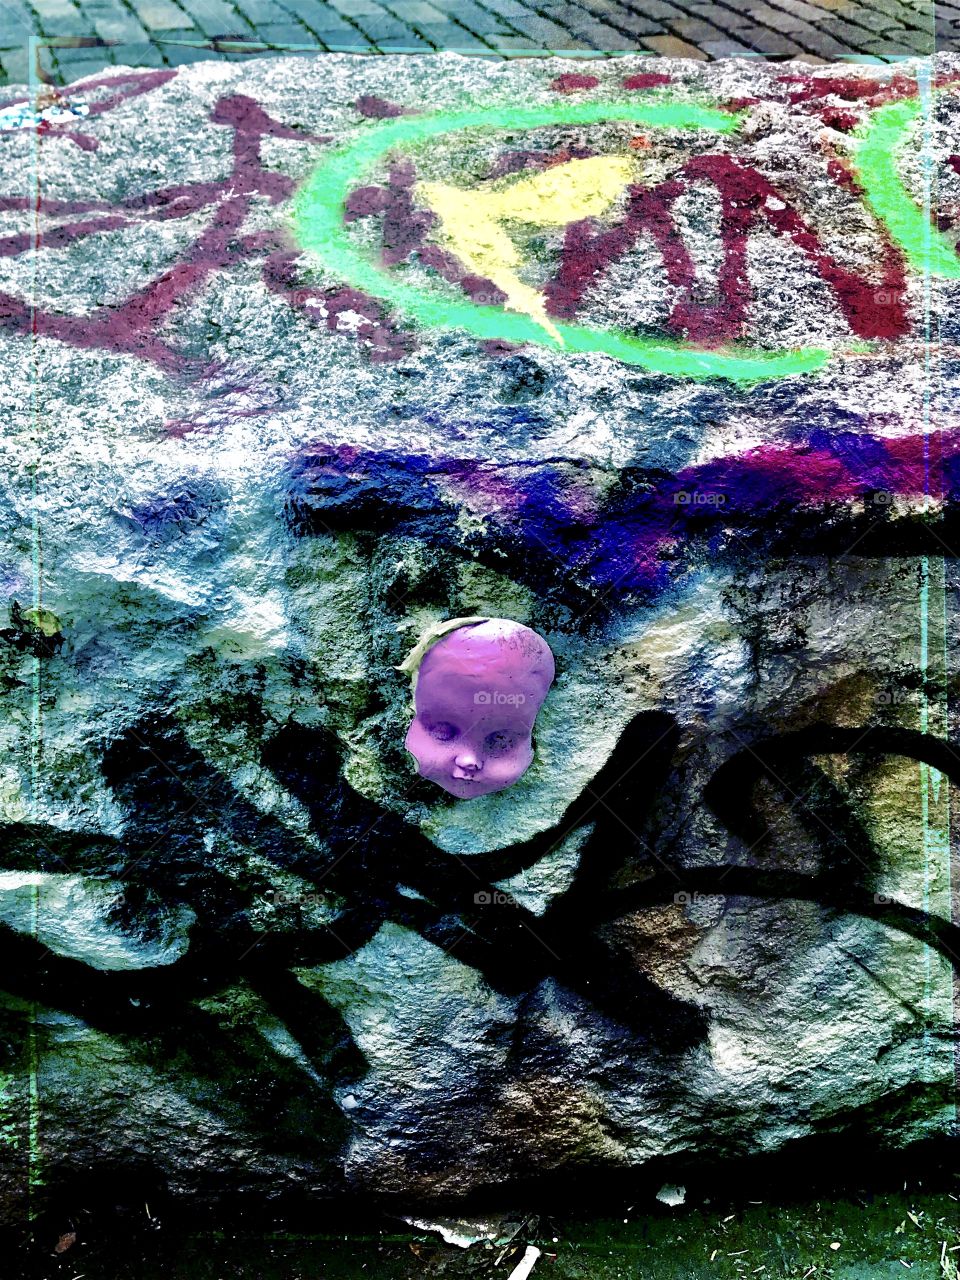 Graffiti on rock and creepy Doll face, sidewalk art in SOHO, New York City 